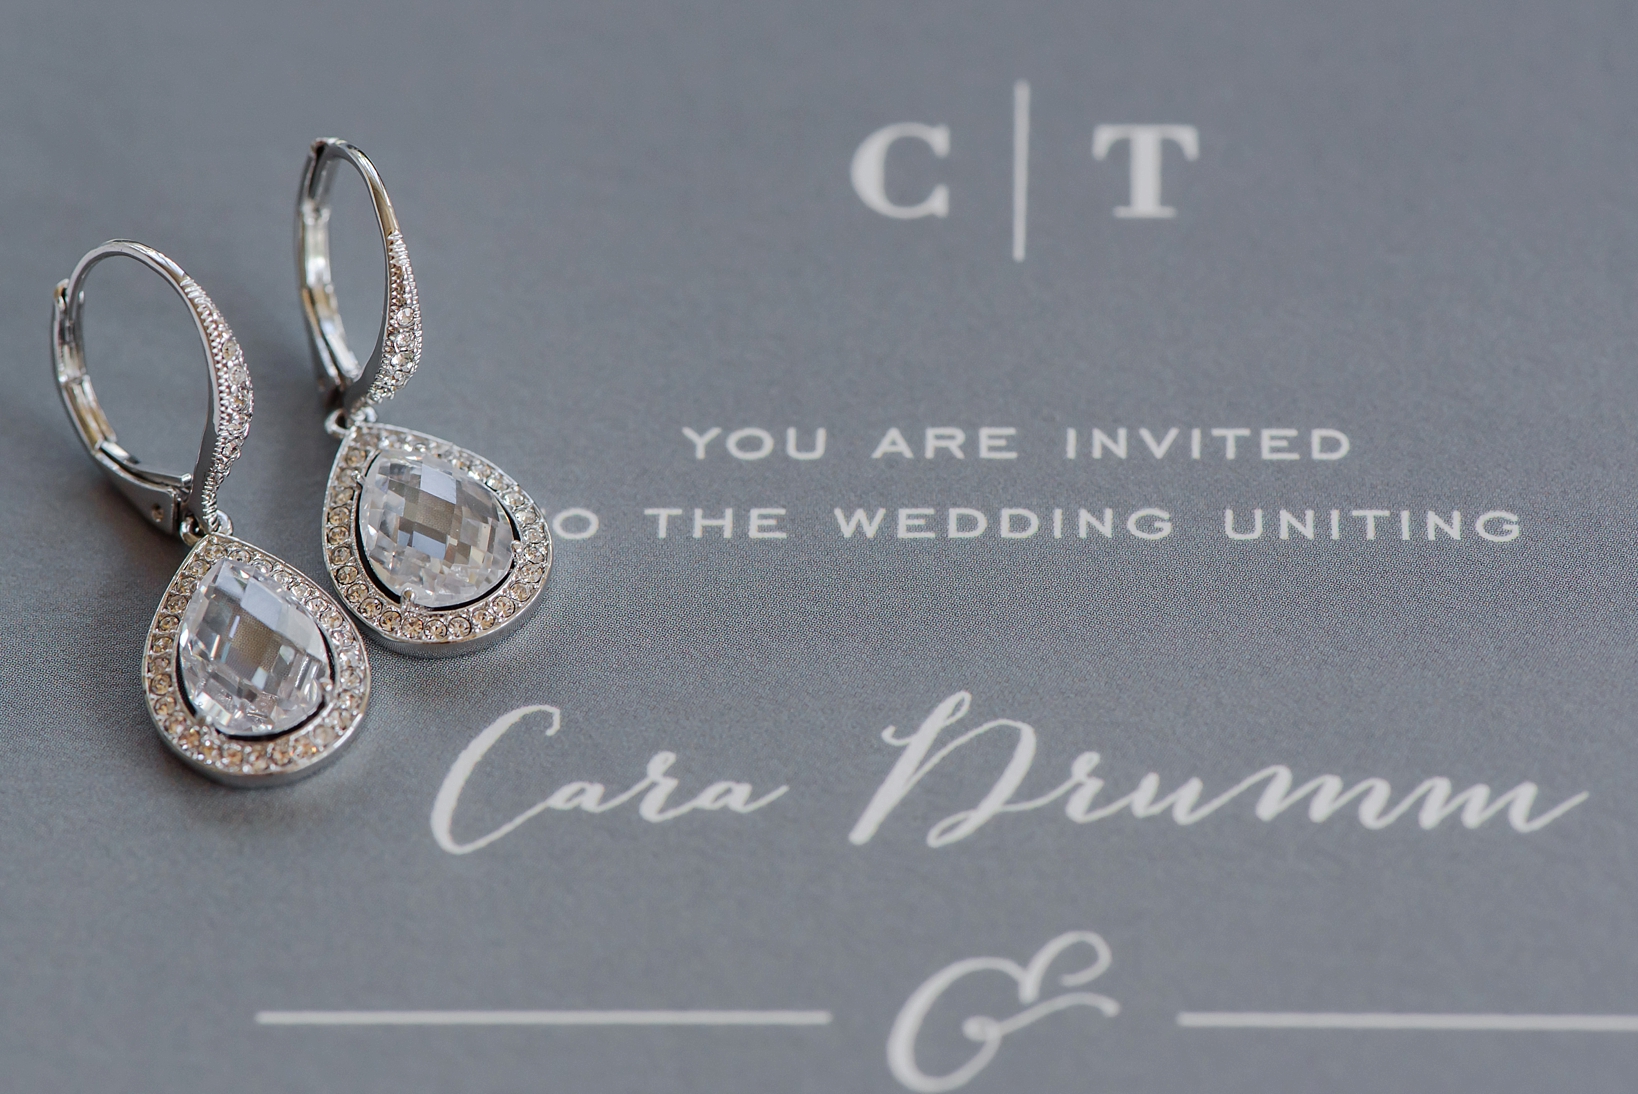 Bridal Earrings against an invitation background